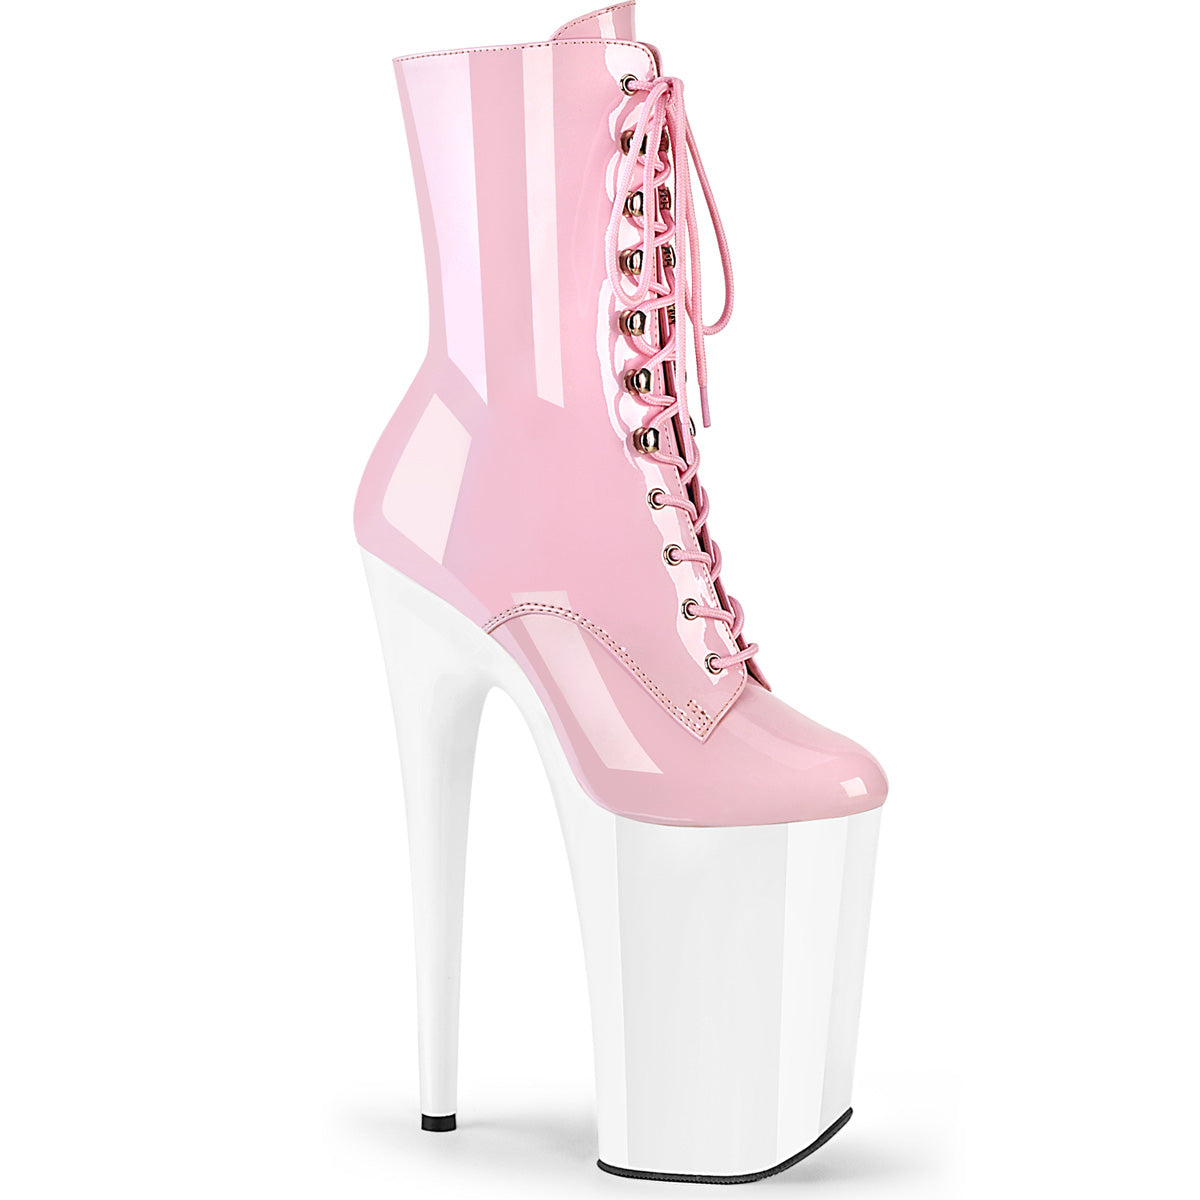 INFINITY-1020 Strippers Heels Pleaser Platforms (Exotic Dancing) B. Pink Pat/Wht